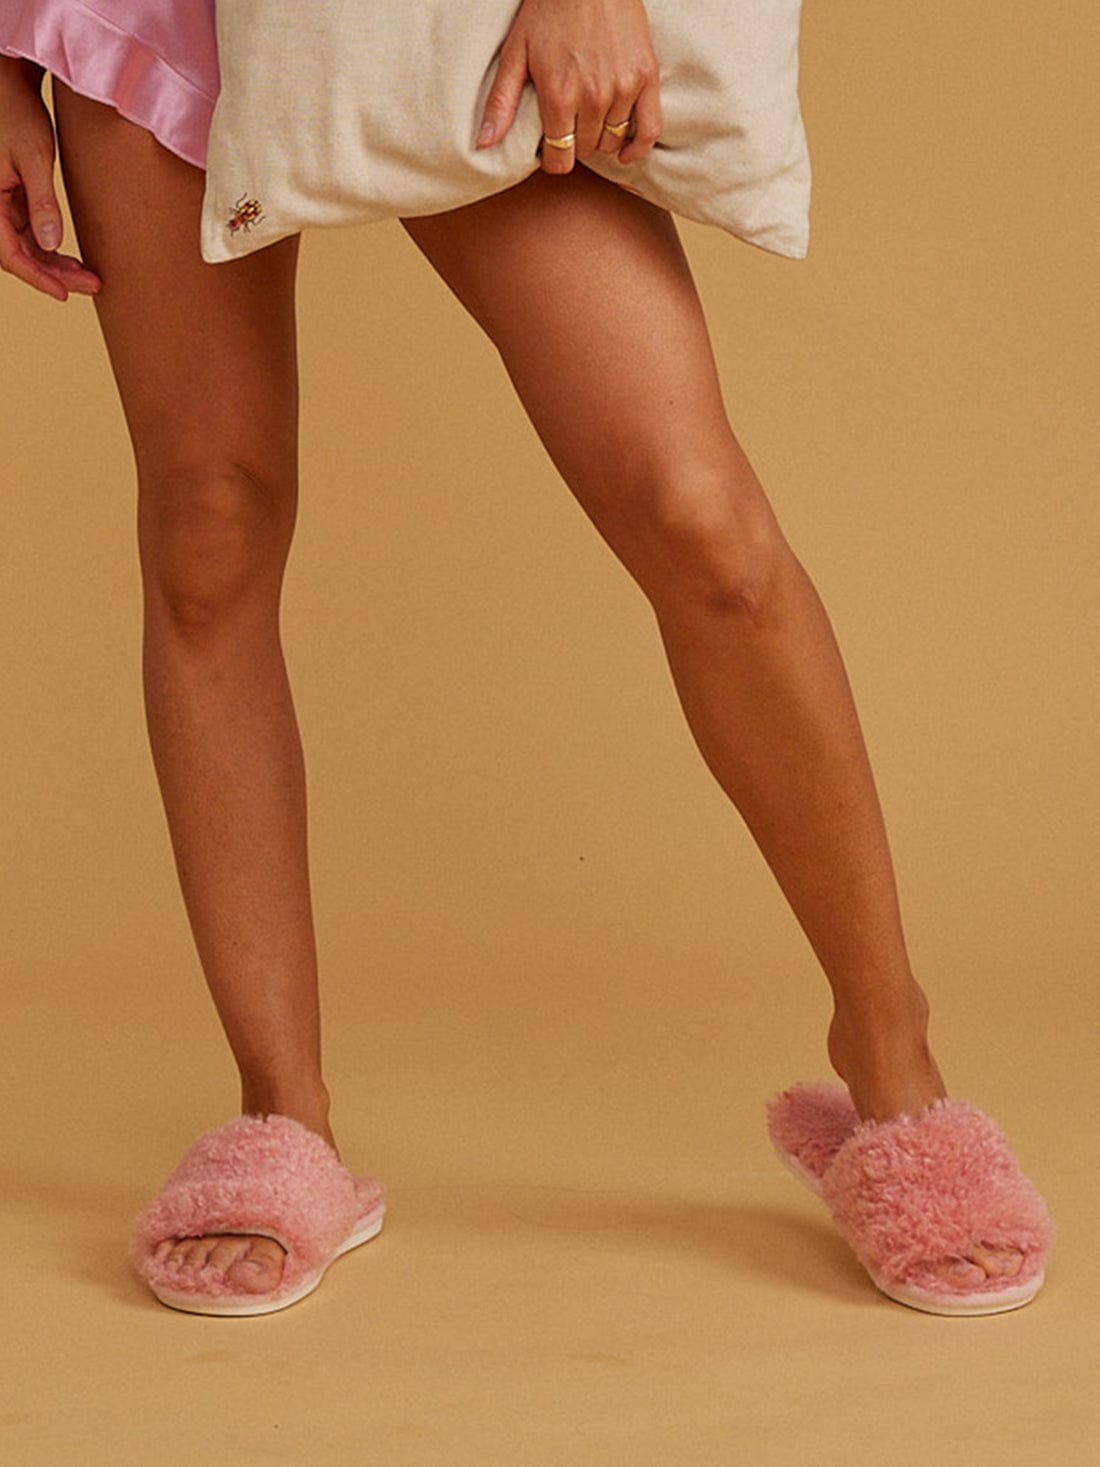 Pink Linni Faux Fur Slippers